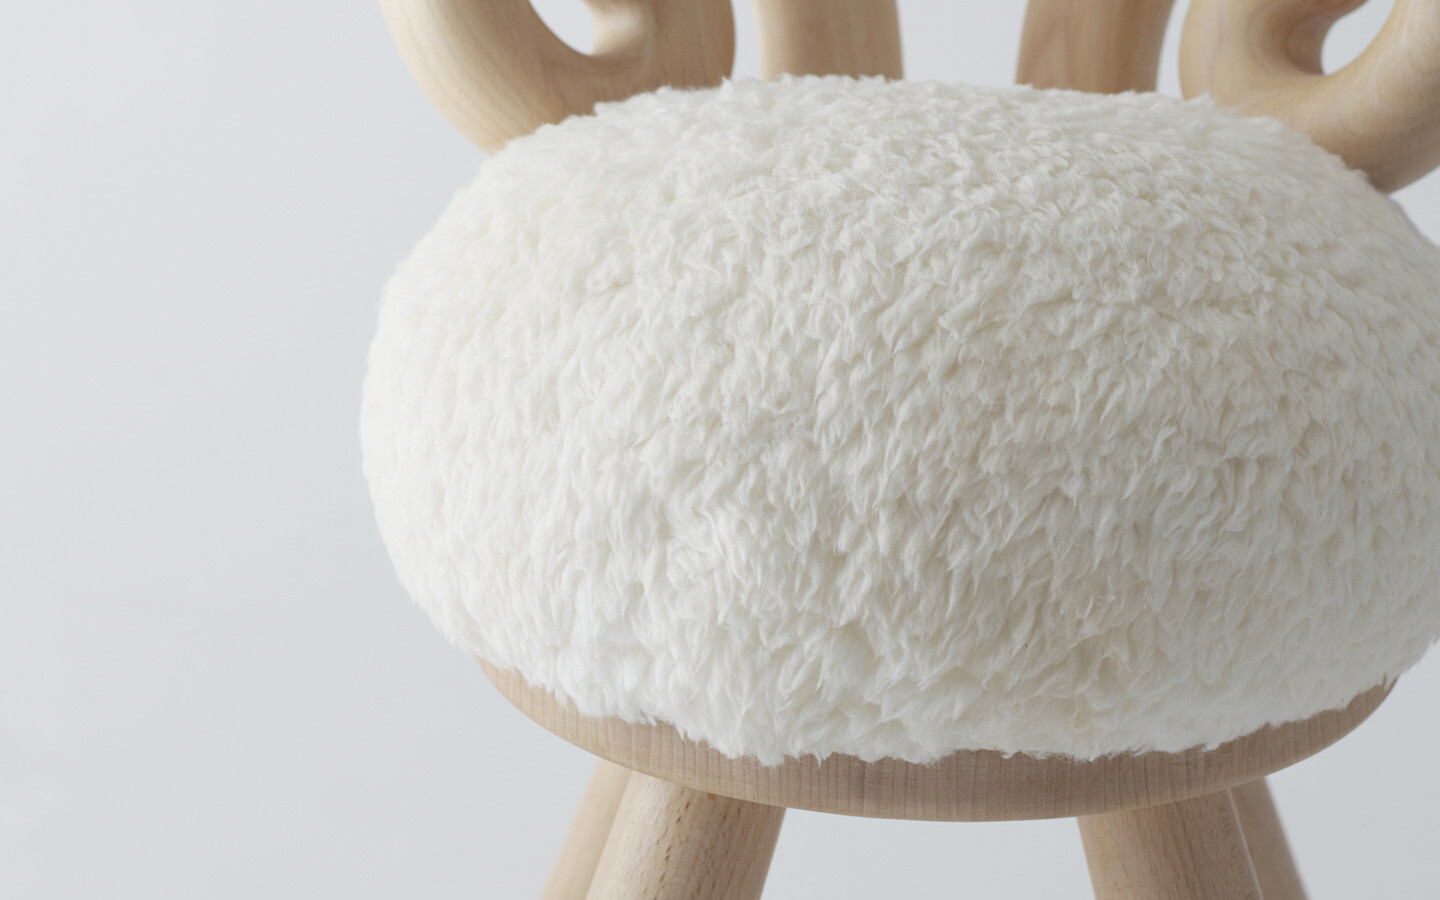 Collection of chairs Takeshi Sawada bring joy to children - HomeWorldDesign (6)